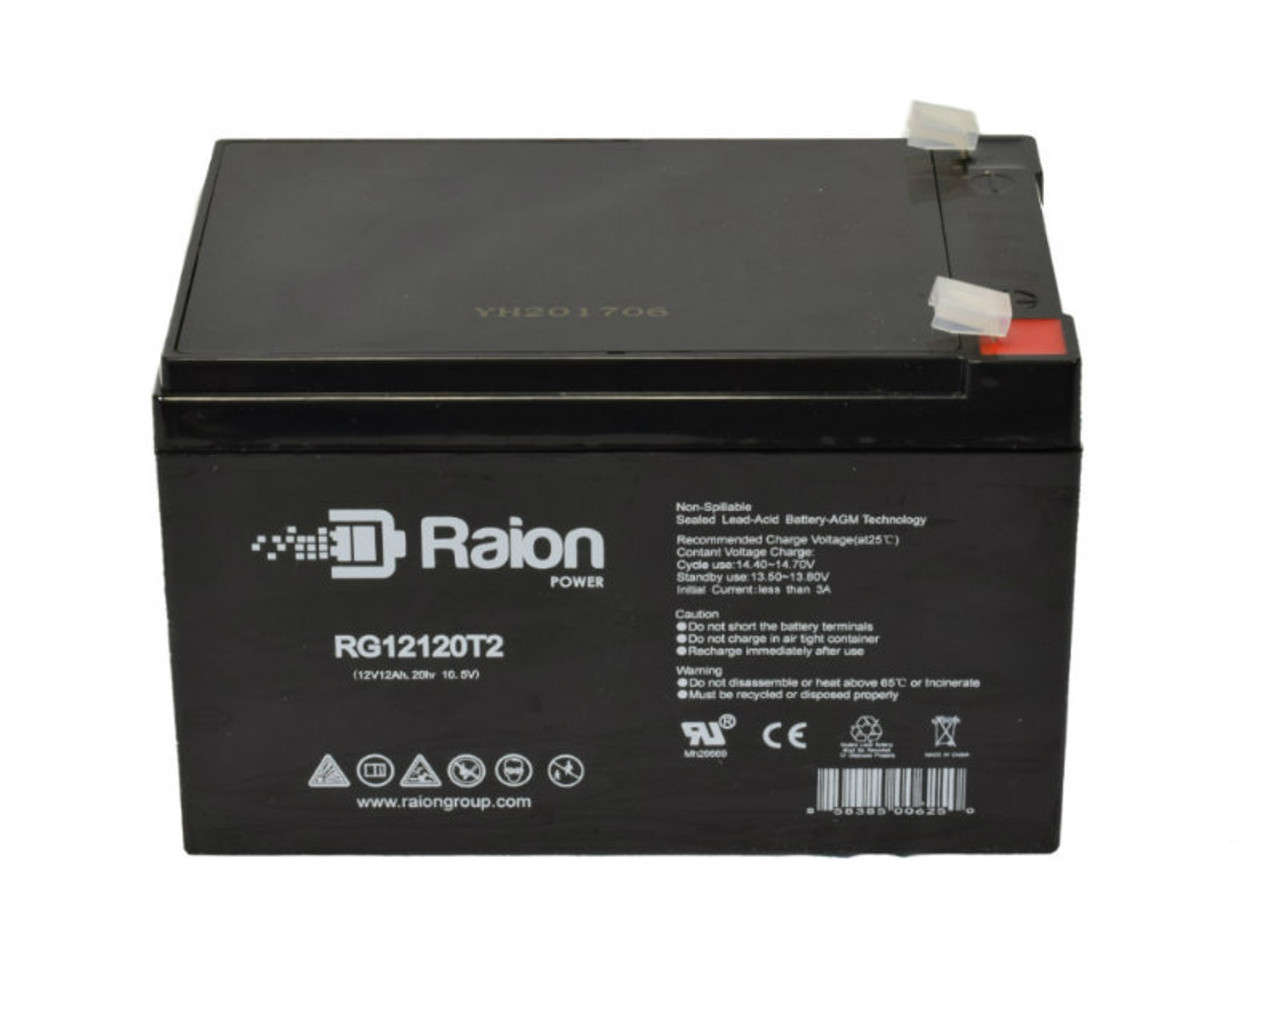 Raion Power RG12120T2 SLA Battery for Mizuho OSI 6875 Hana Orthopedic Surgical Table